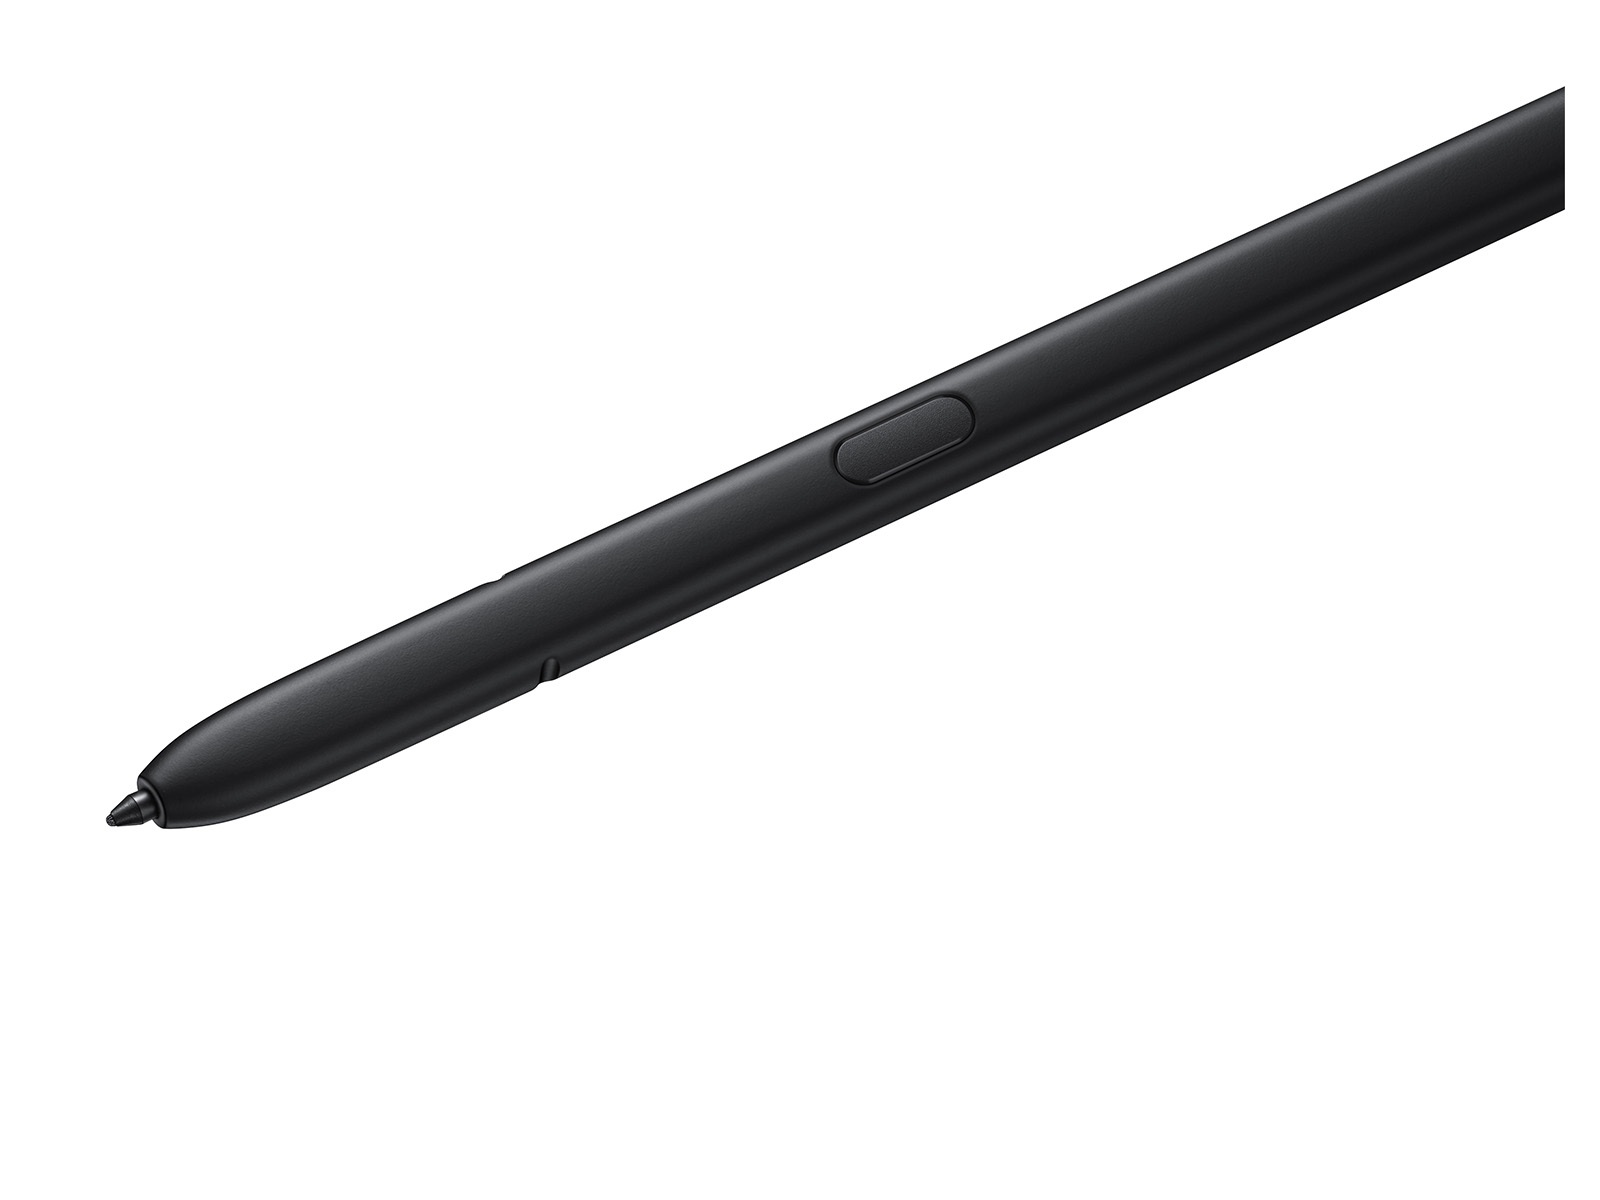 EJ-PS918BBEGUS | Accessories - Black S23 S Pen, Samsung Ultra Mobile Galaxy US Phantom